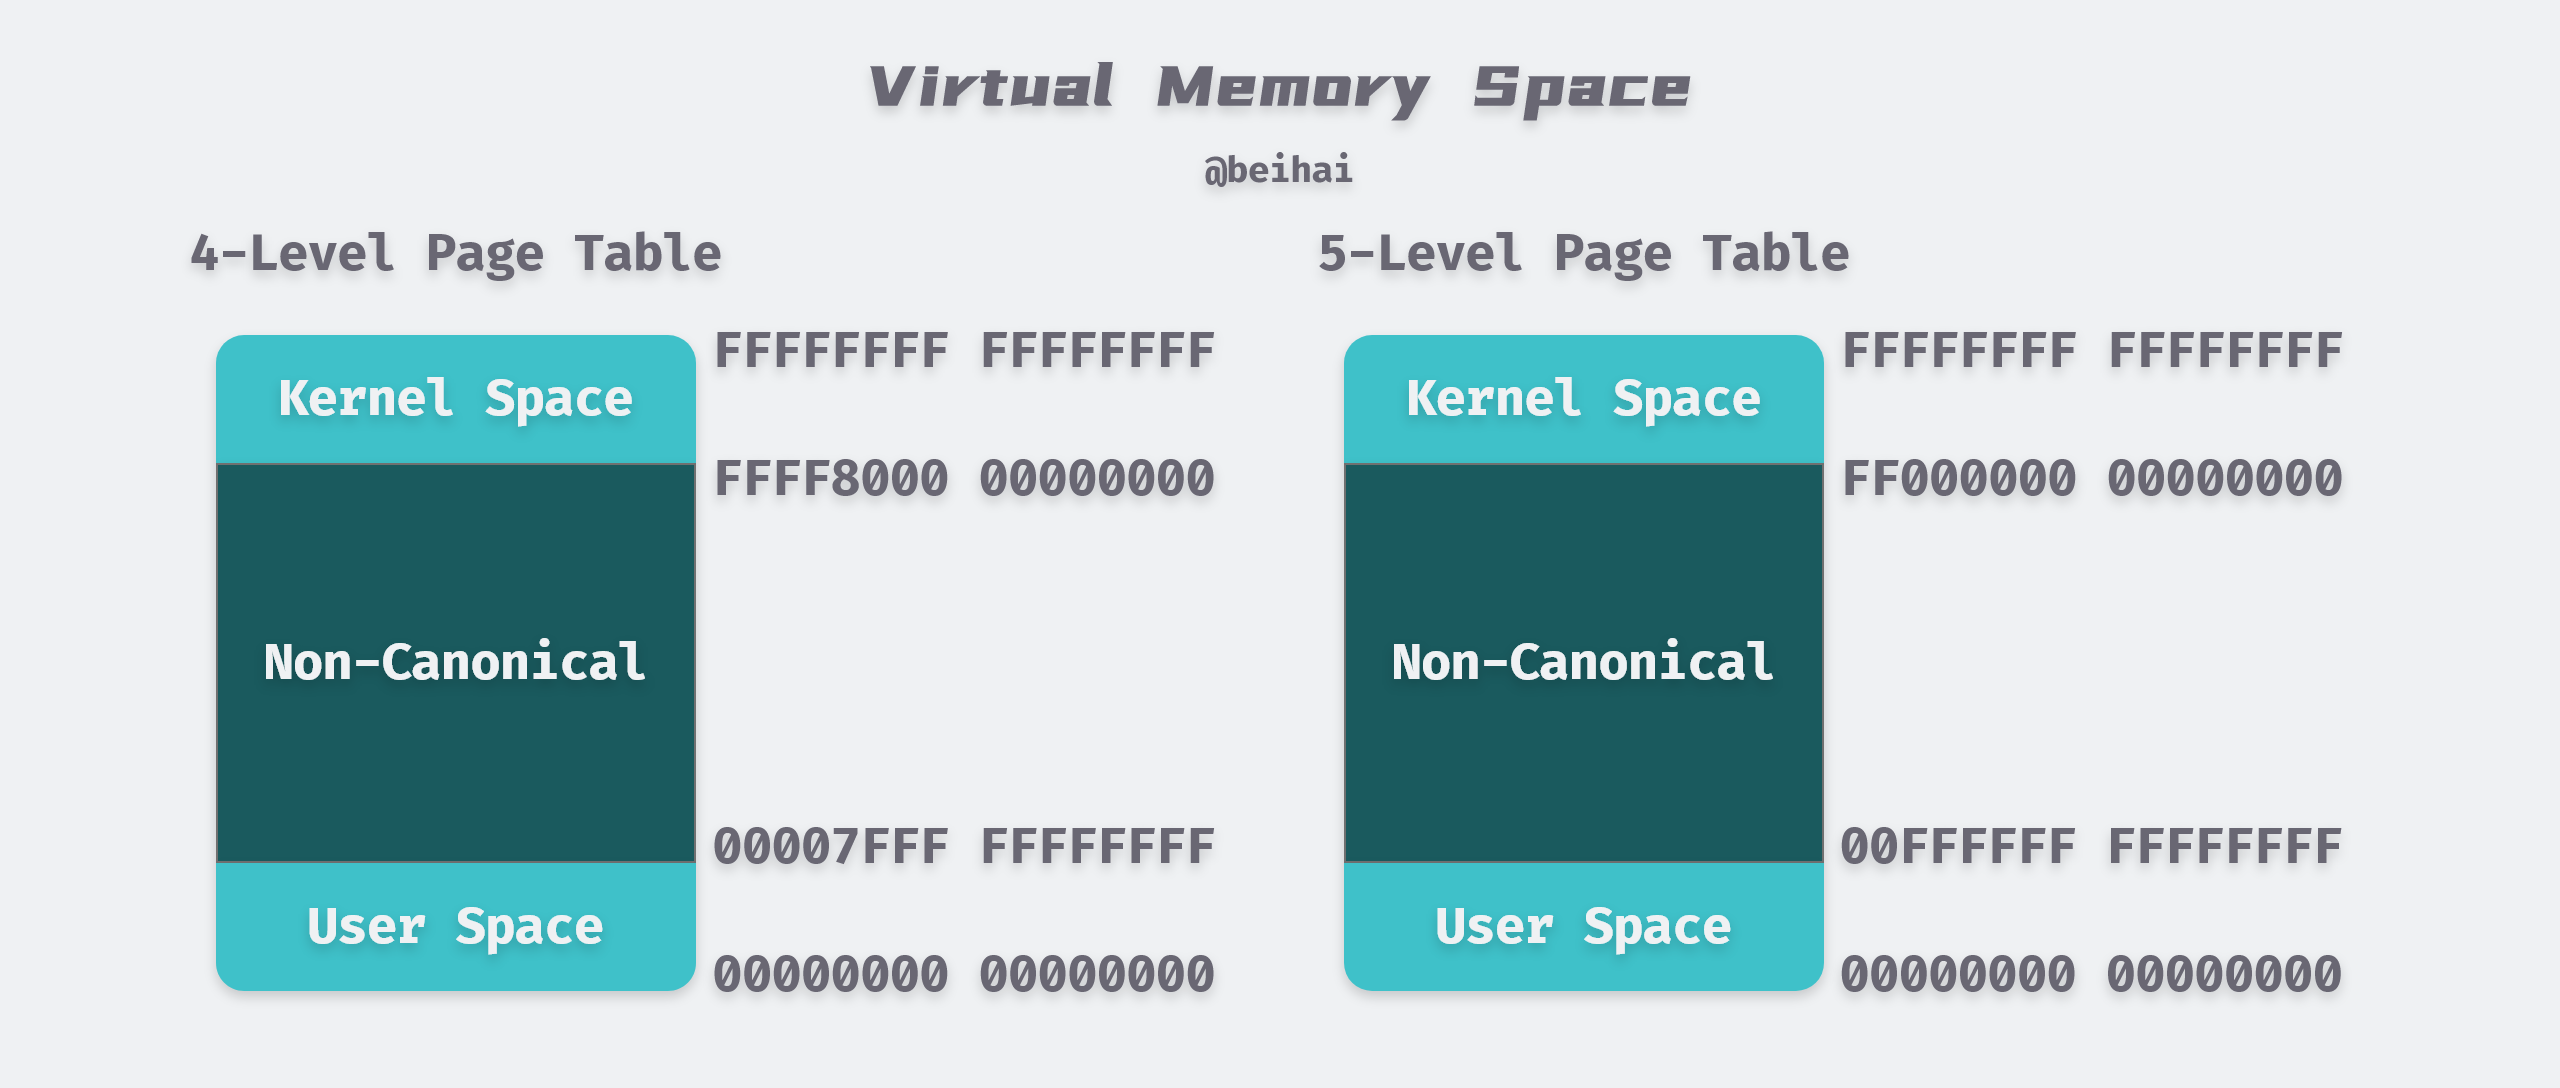 Virtual memory space